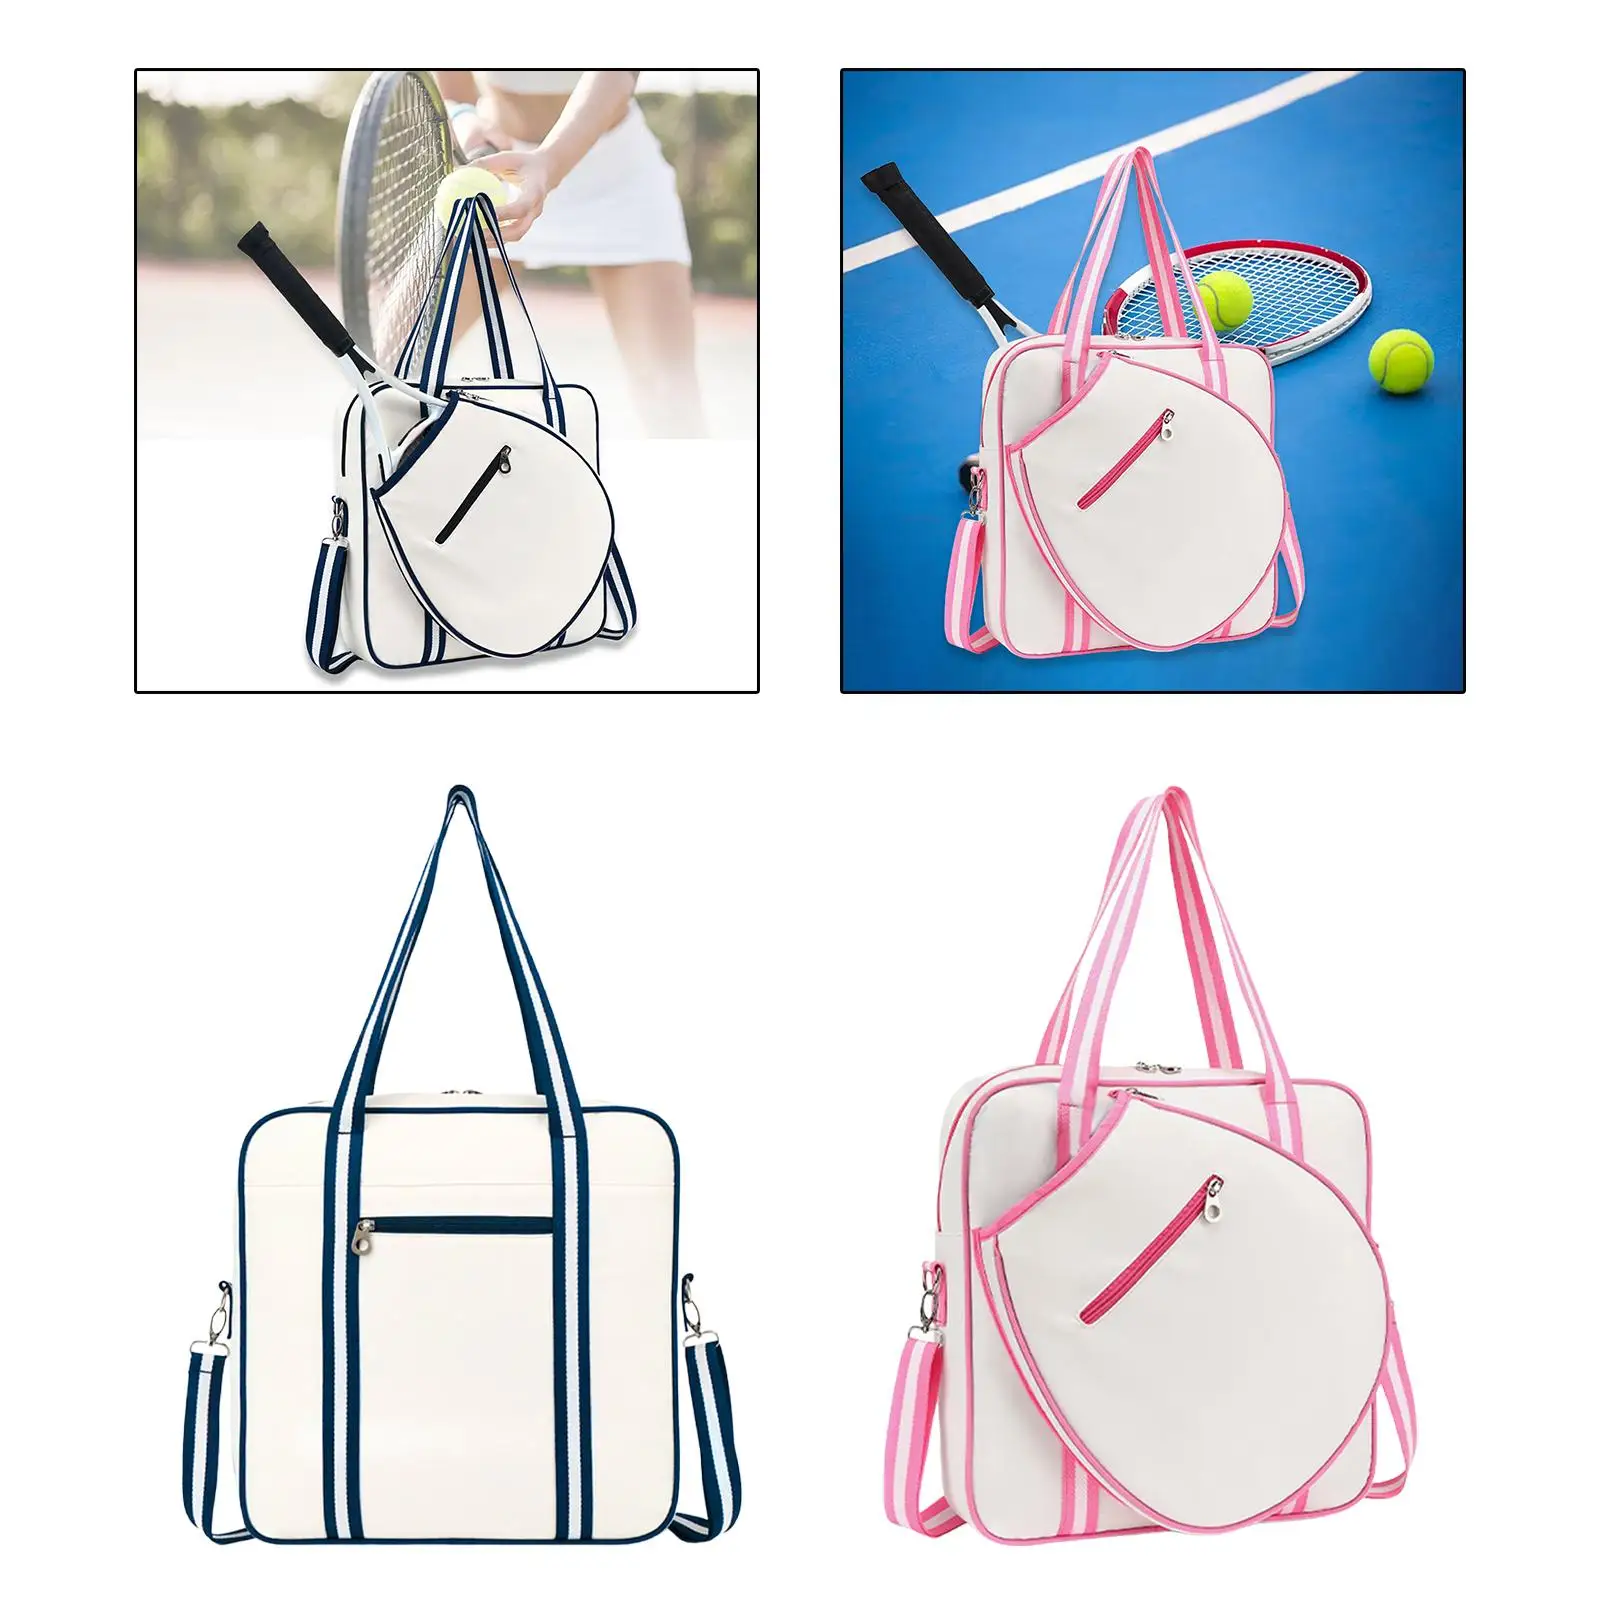 Tennis Racket Shoulder Bag Sports Handbag Durable Anti Scratches 39x10x39cm for Biking, Outdoor Tour, Gym, Picnic, Hiking